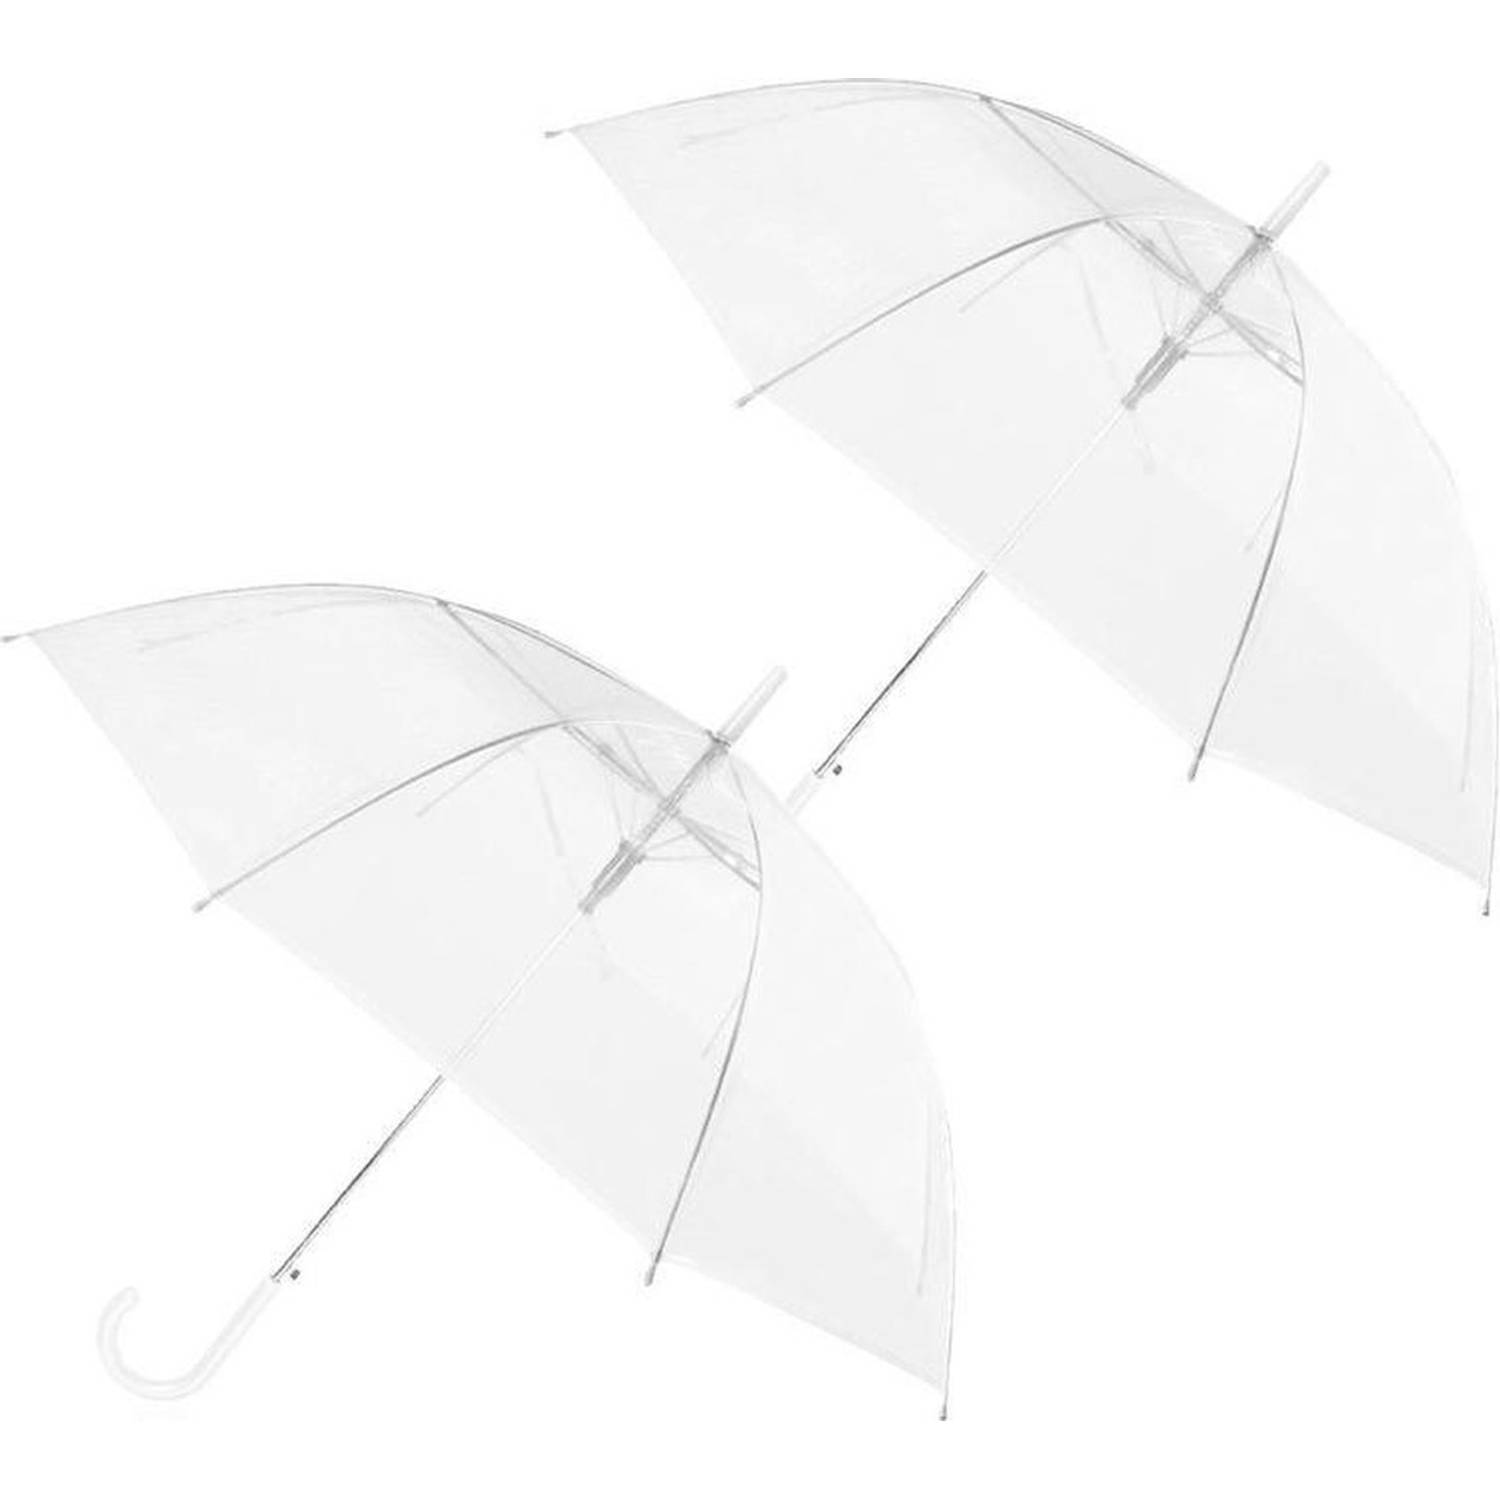 2x Transparant plastic paraplu 92 - doorzichtige paraplu - trouwparaplu - bruidsparaplu - stijlvol - - | Blokker